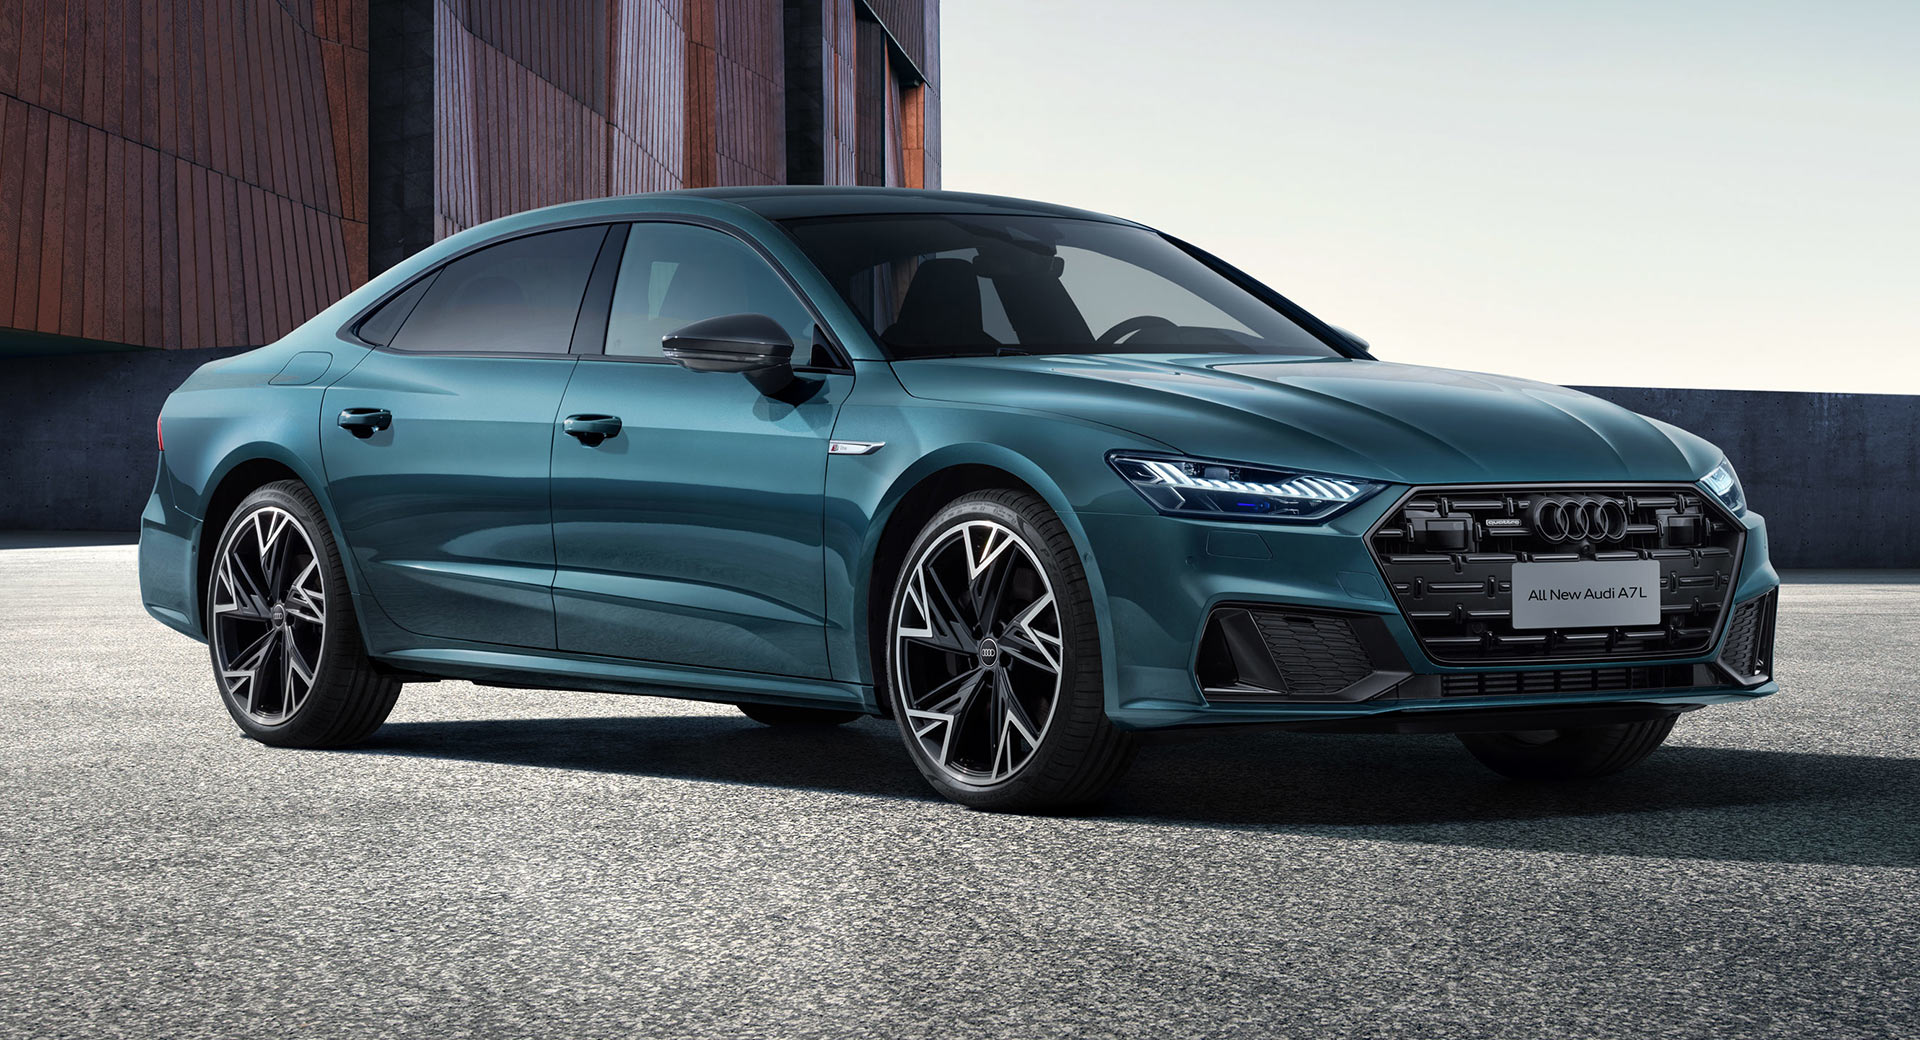 https://www.carscoops.com/wp-content/uploads/2021/04/Audi-A7-L-opening.jpg